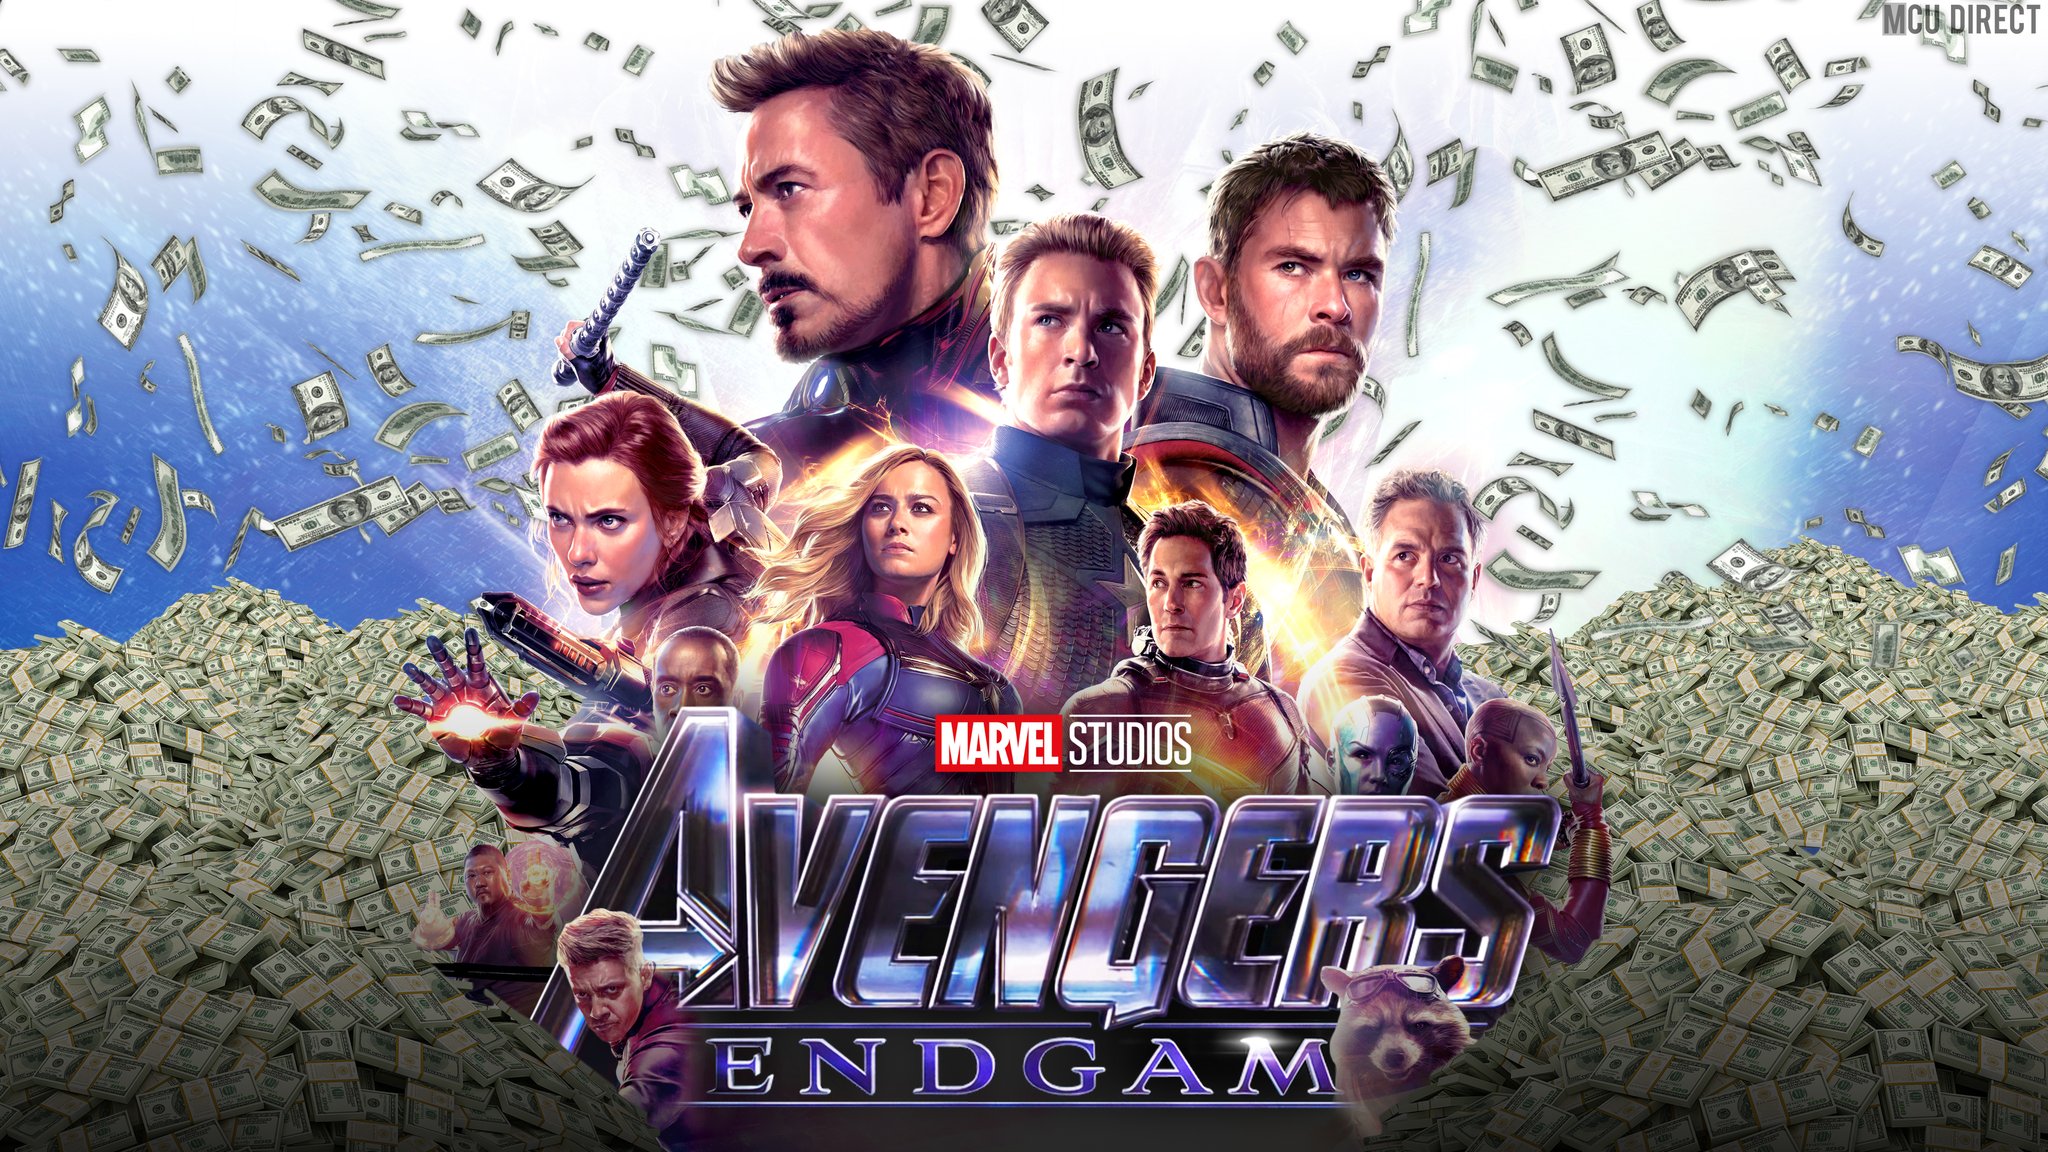 'Avengers: Endgame' To Cross $1 Billion On Opening Weekend